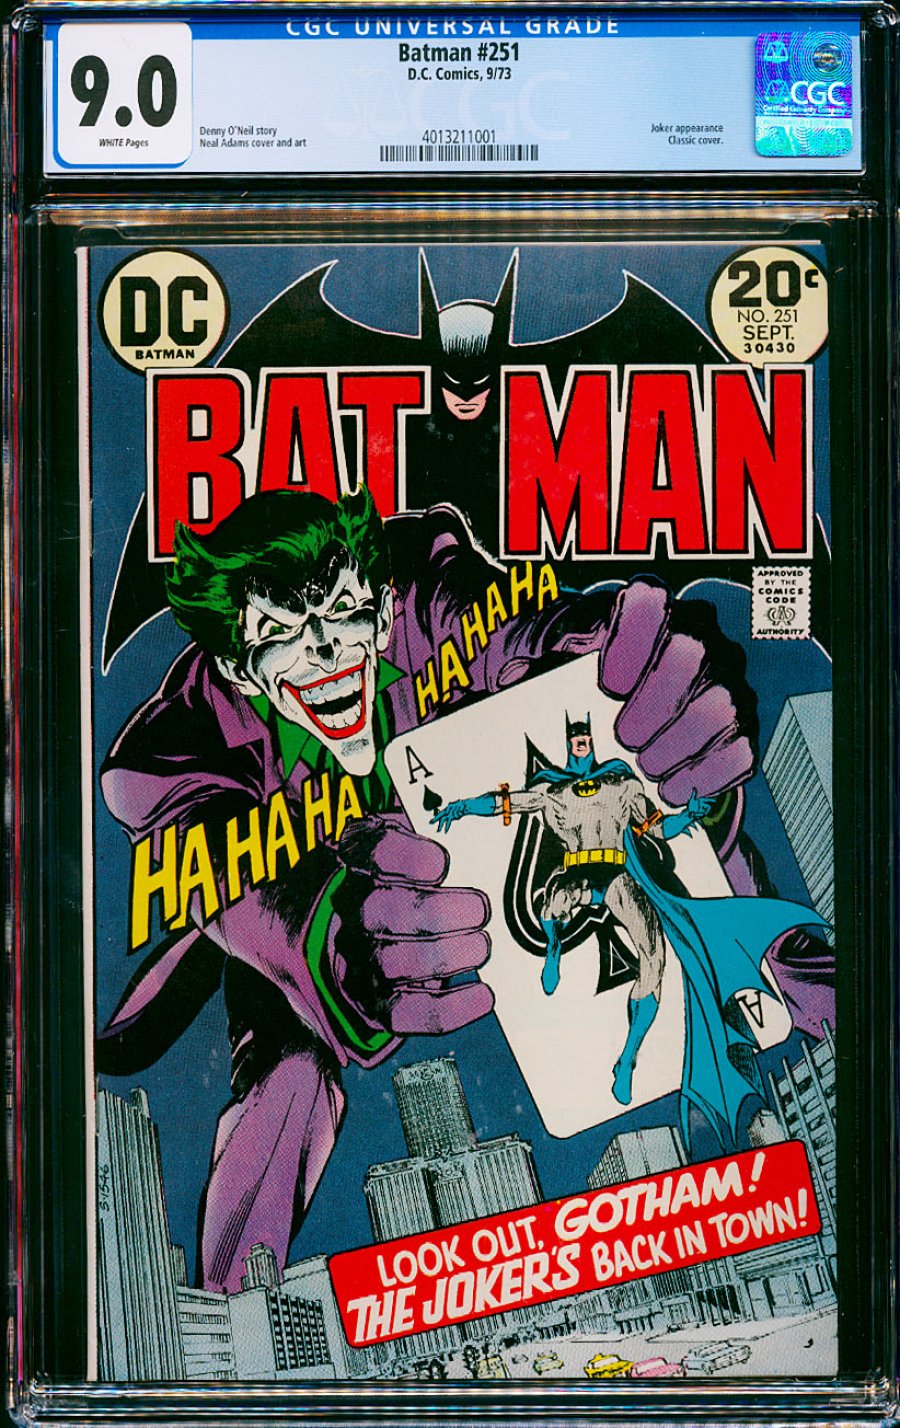 ComicConnect - BATMAN (1940-2011) #251 - CGC VF/NM: 